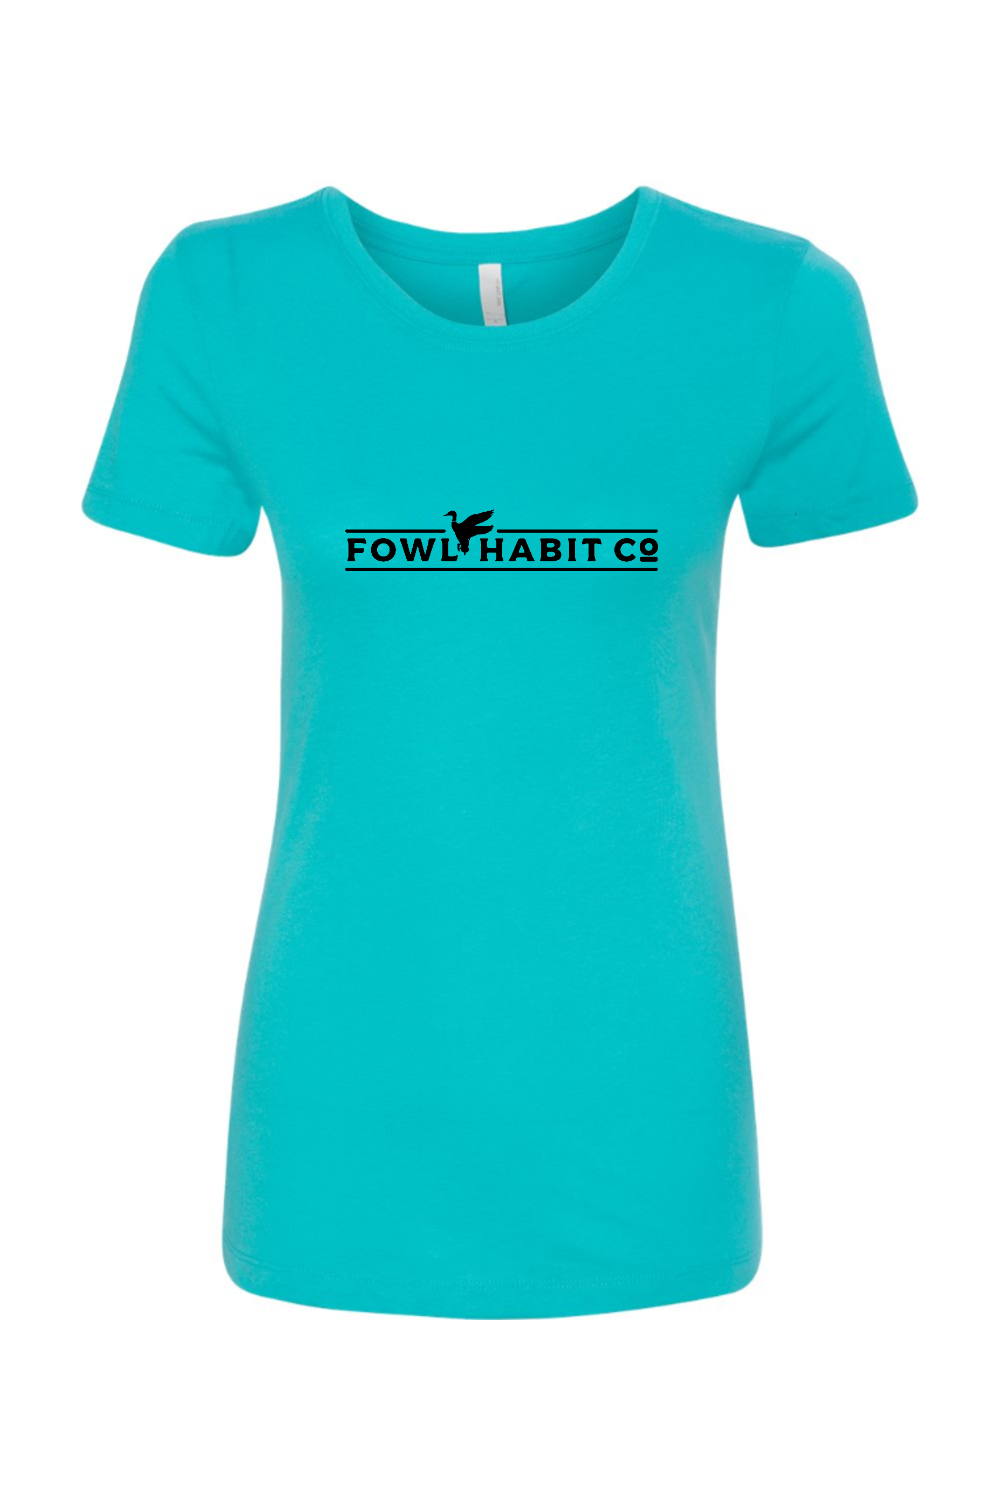 Womens "The Brand" T-Shirt - Fowl Habit Co.